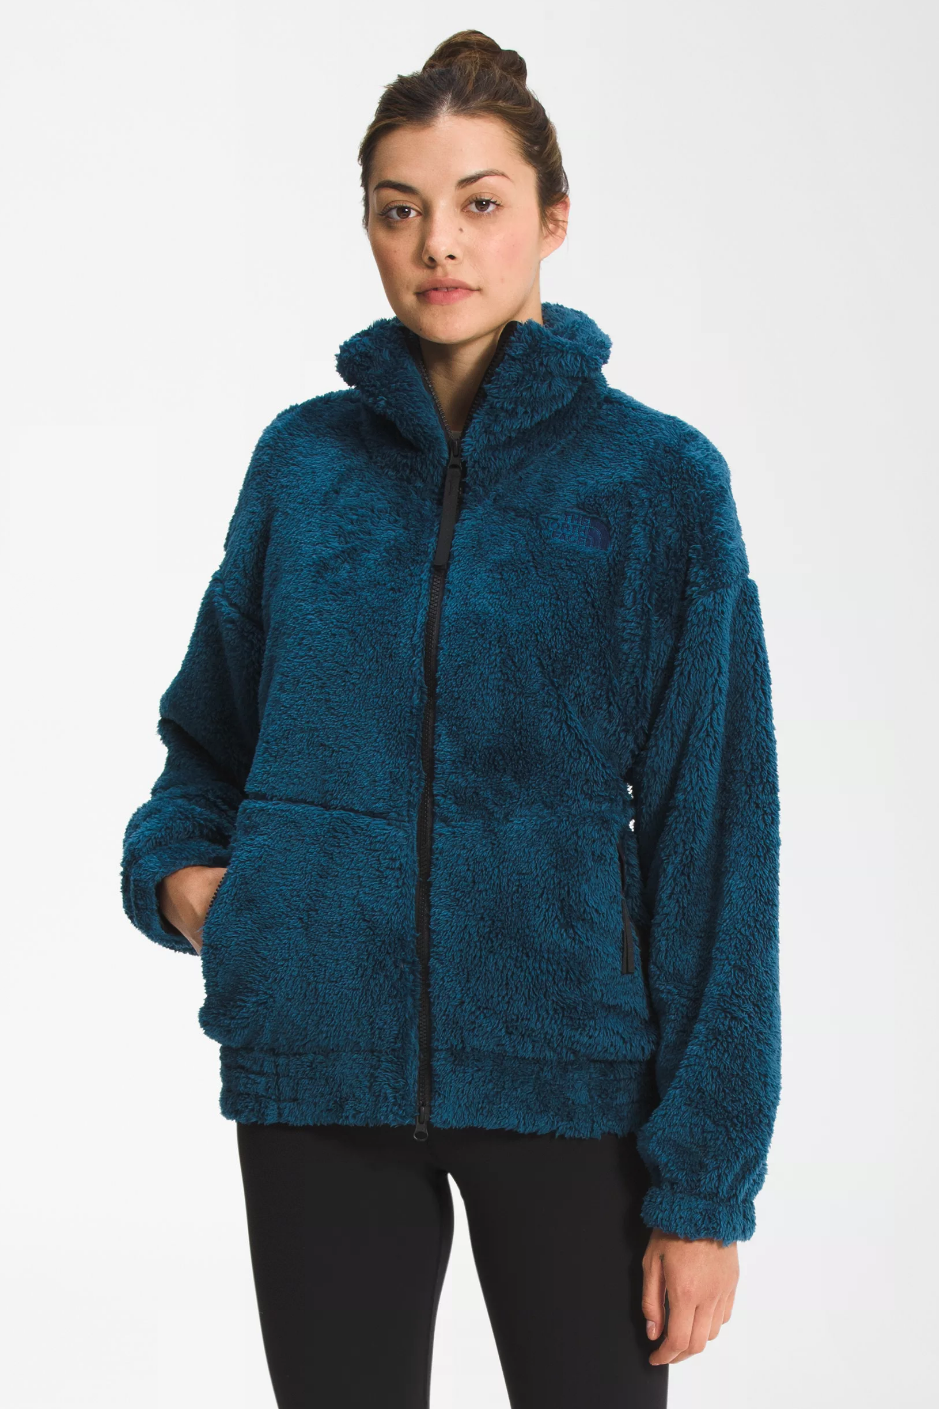 Favorite Fleece Jackets - North Face Osito